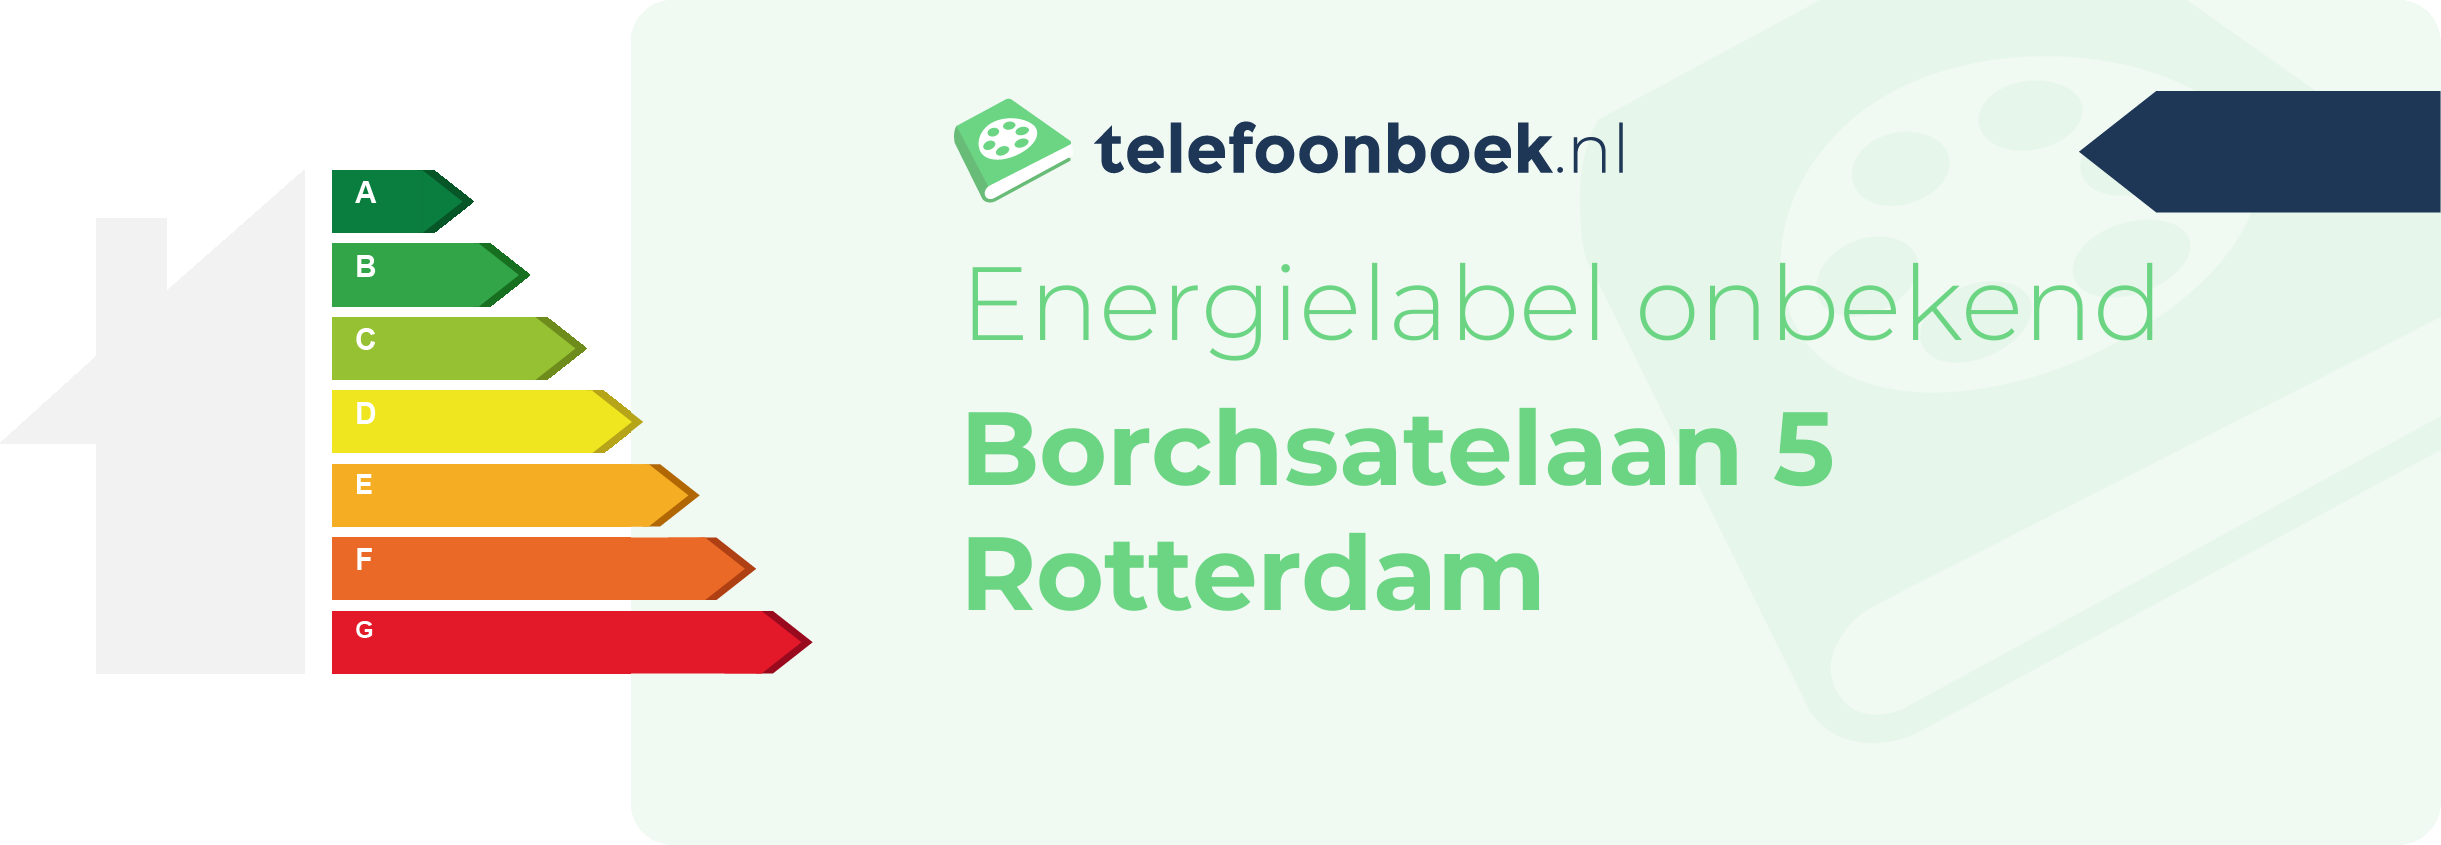 Energielabel Borchsatelaan 5 Rotterdam